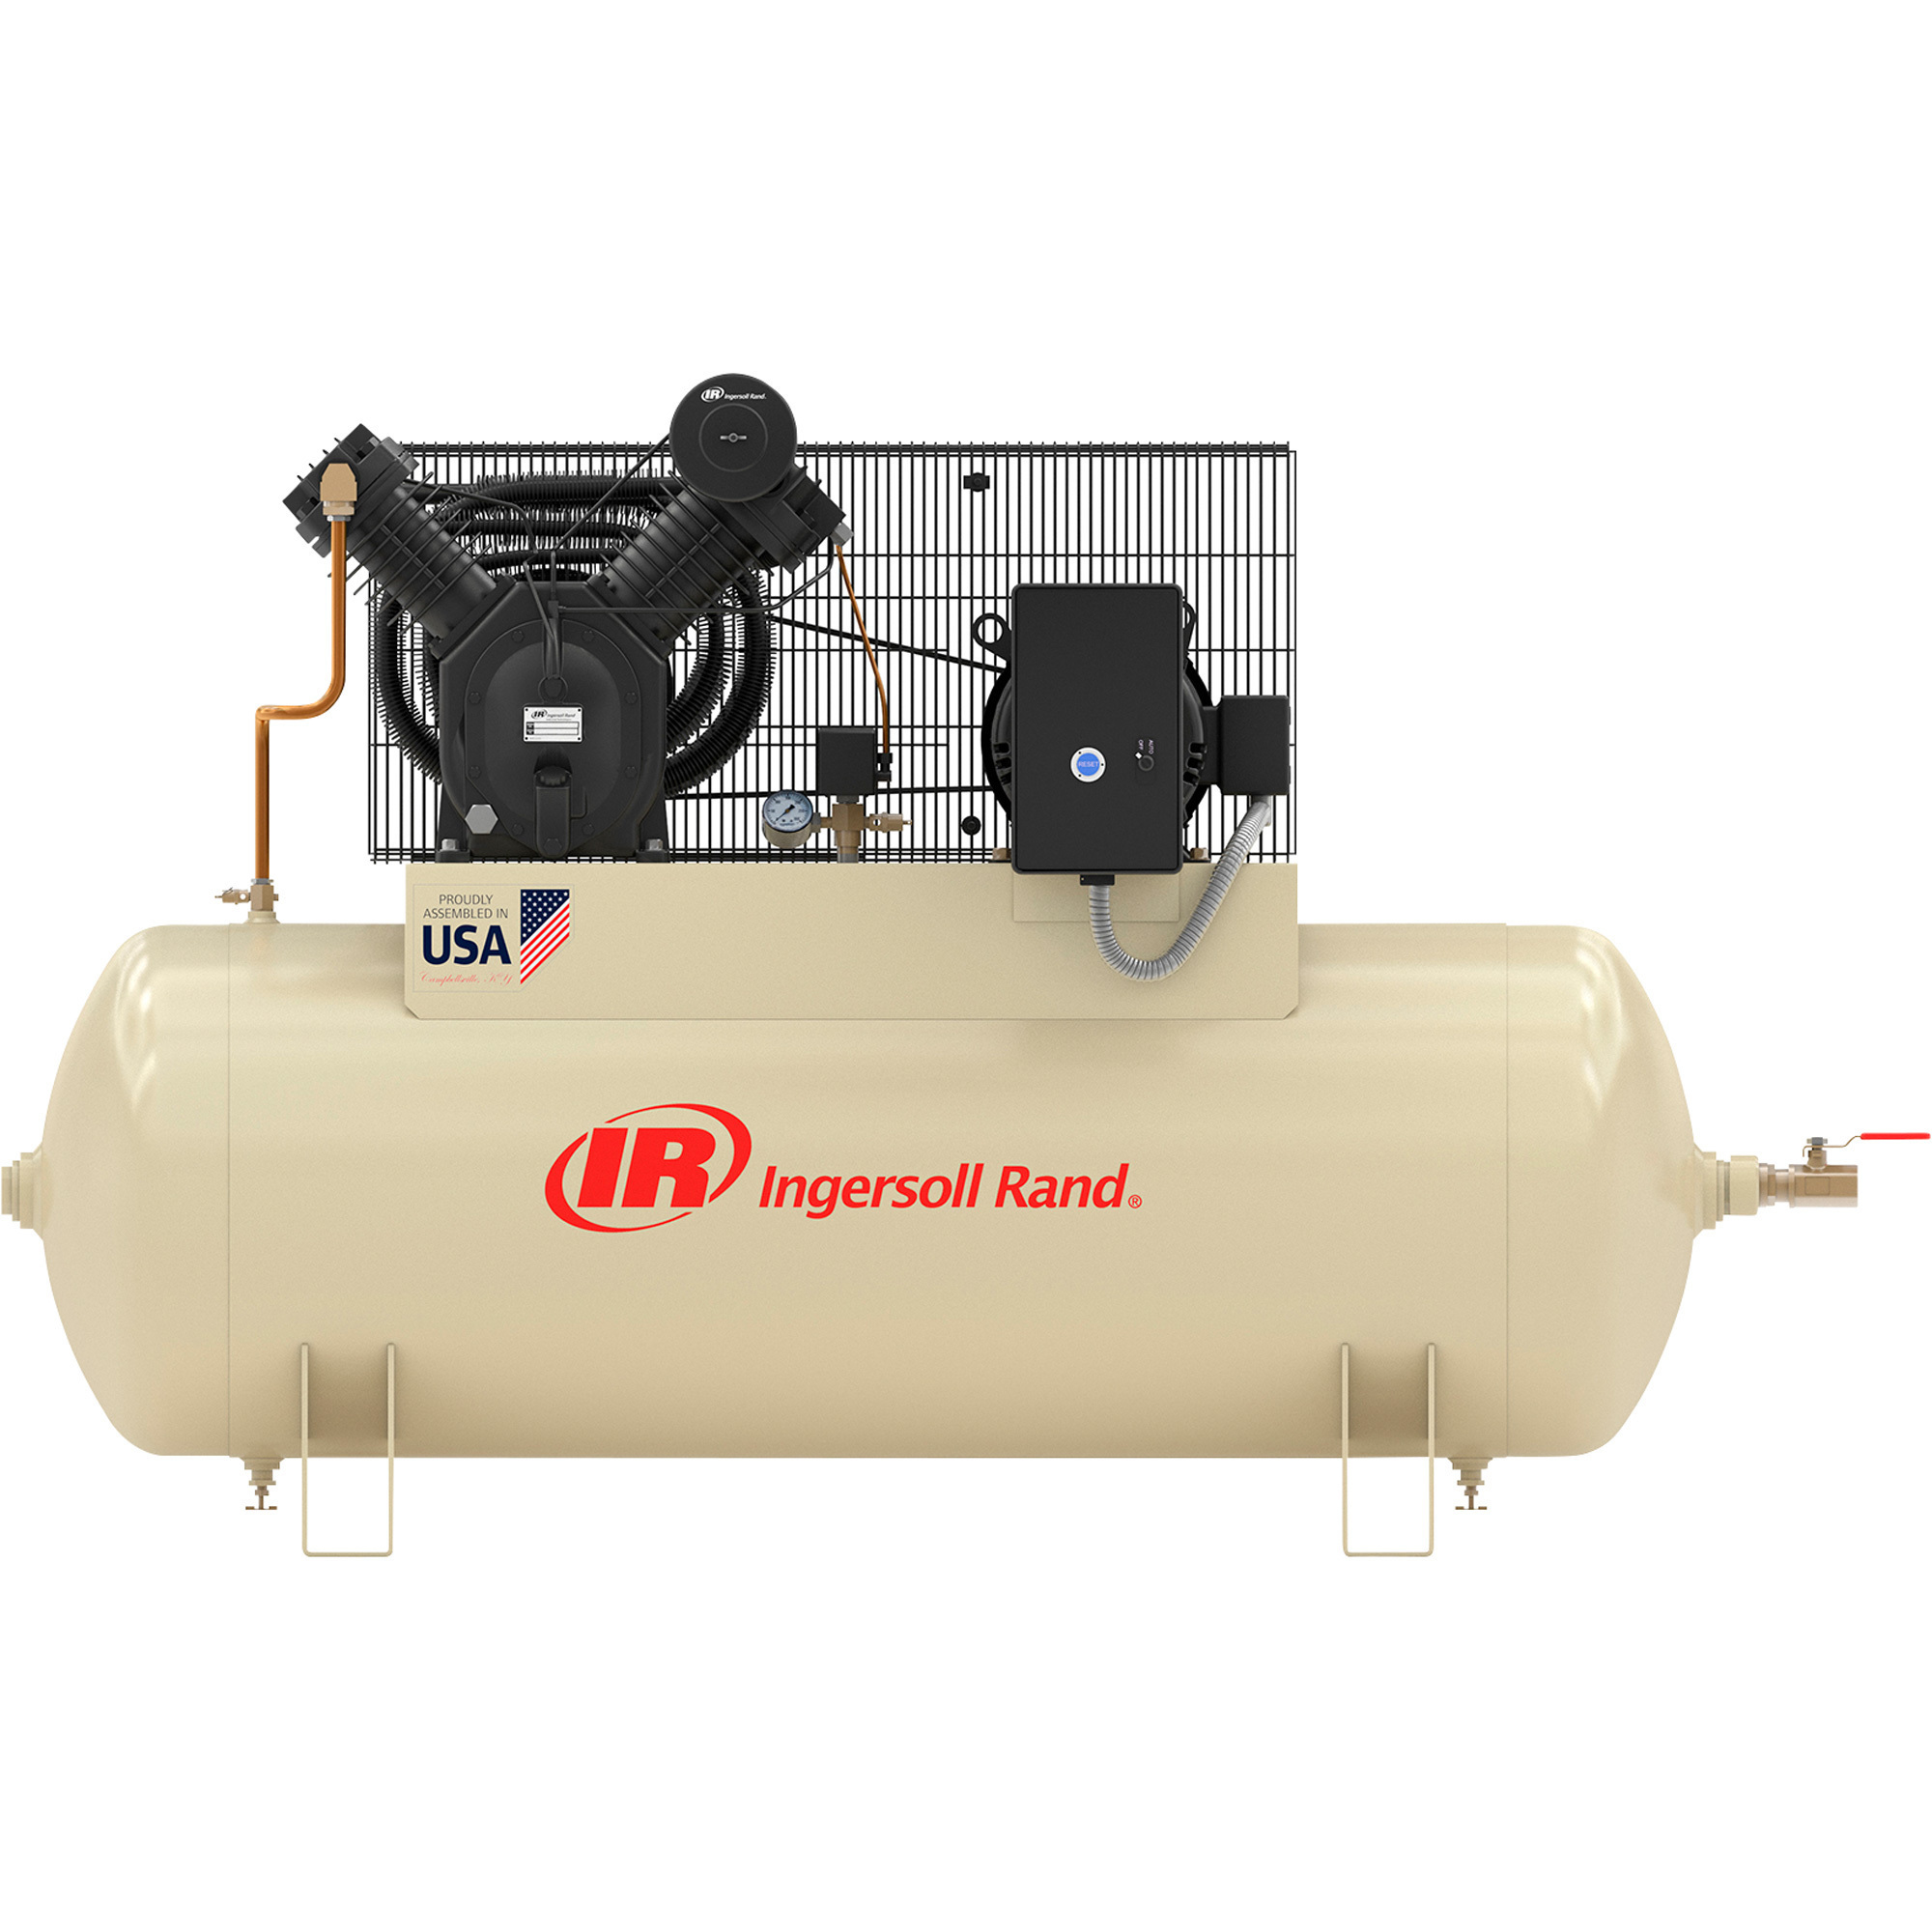 Ingersoll Rand Type-30 Reciprocating Air Compressor, 15 HP, 200 Volt, 3 Phase, 120 Gallon Horizontal, Model 7100E15-V